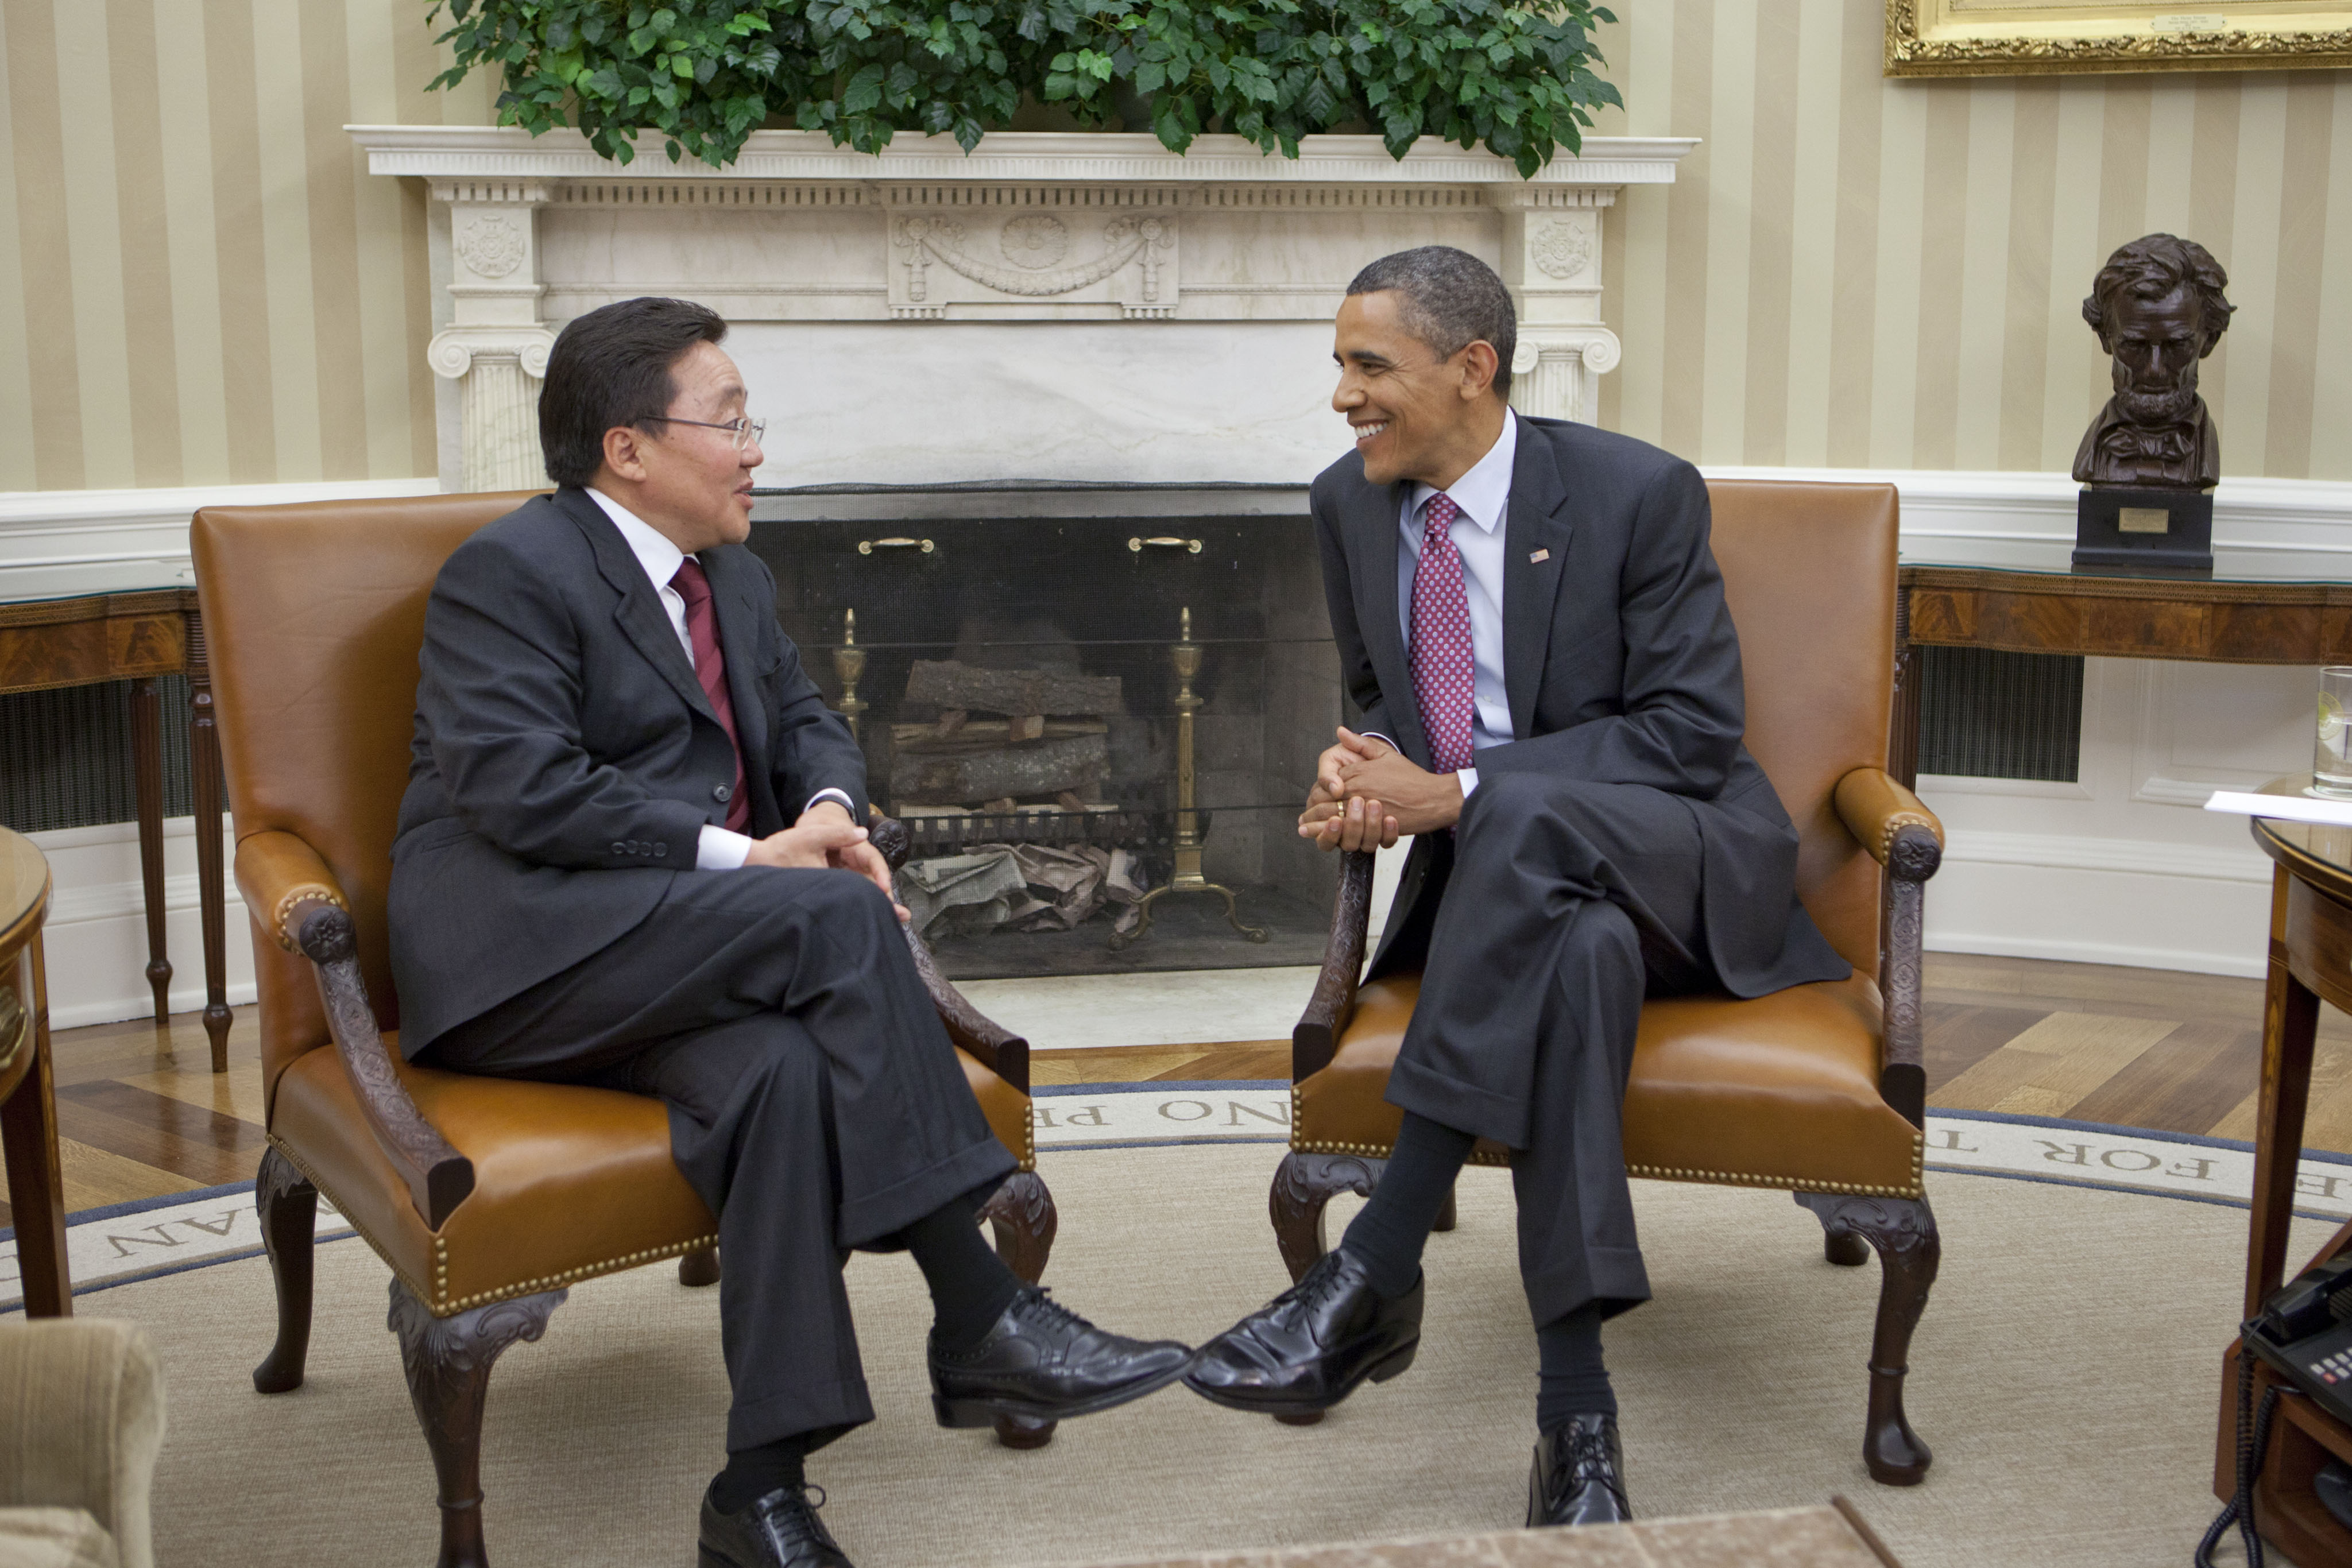 President Barack Obama Meets with President Tsakhia Elbegdorj of Mongolia